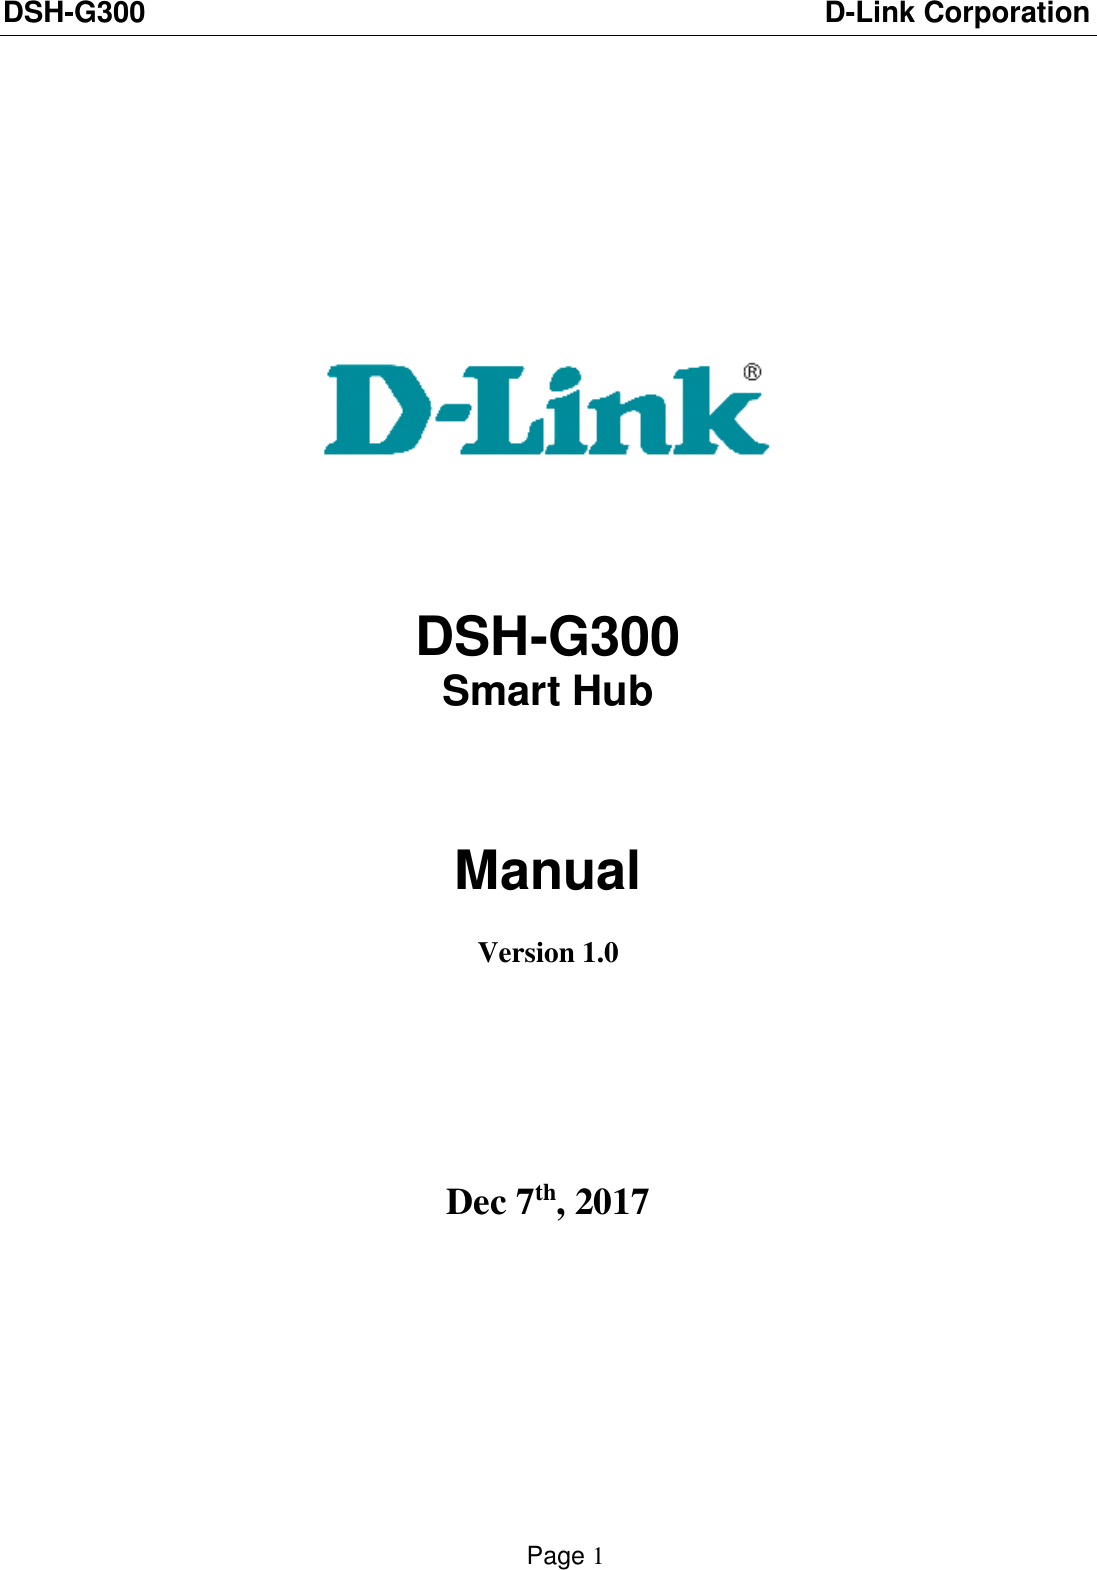 DSH-G300                          D-Link Corporation    Page 1                  DSH-G300  Smart Hub   Manual  Version 1.0     Dec 7th, 2017         